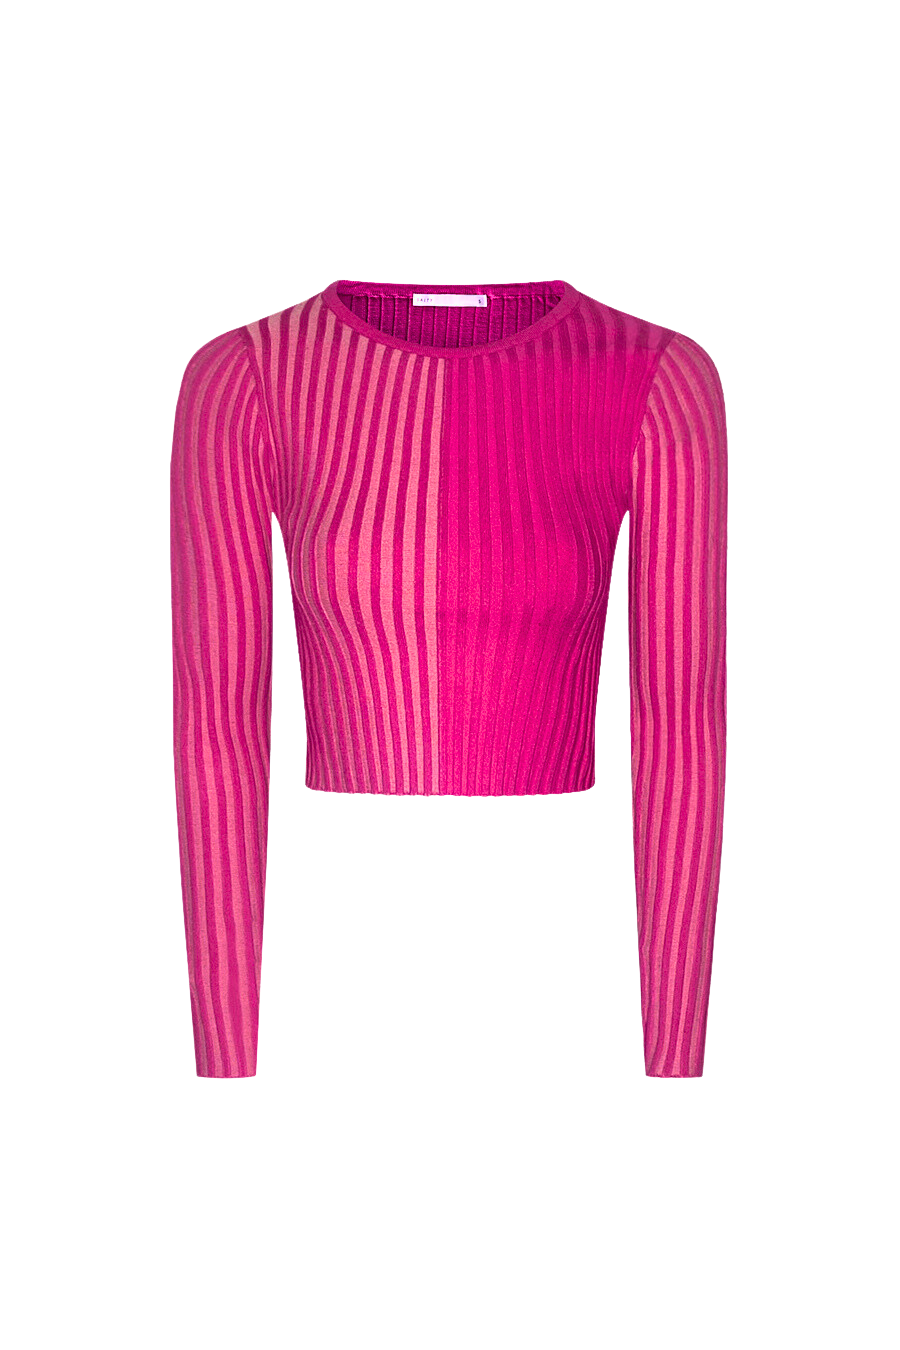 "DOUBLE TAKE" Magenta Pink Back-Slit Maxi Skirt